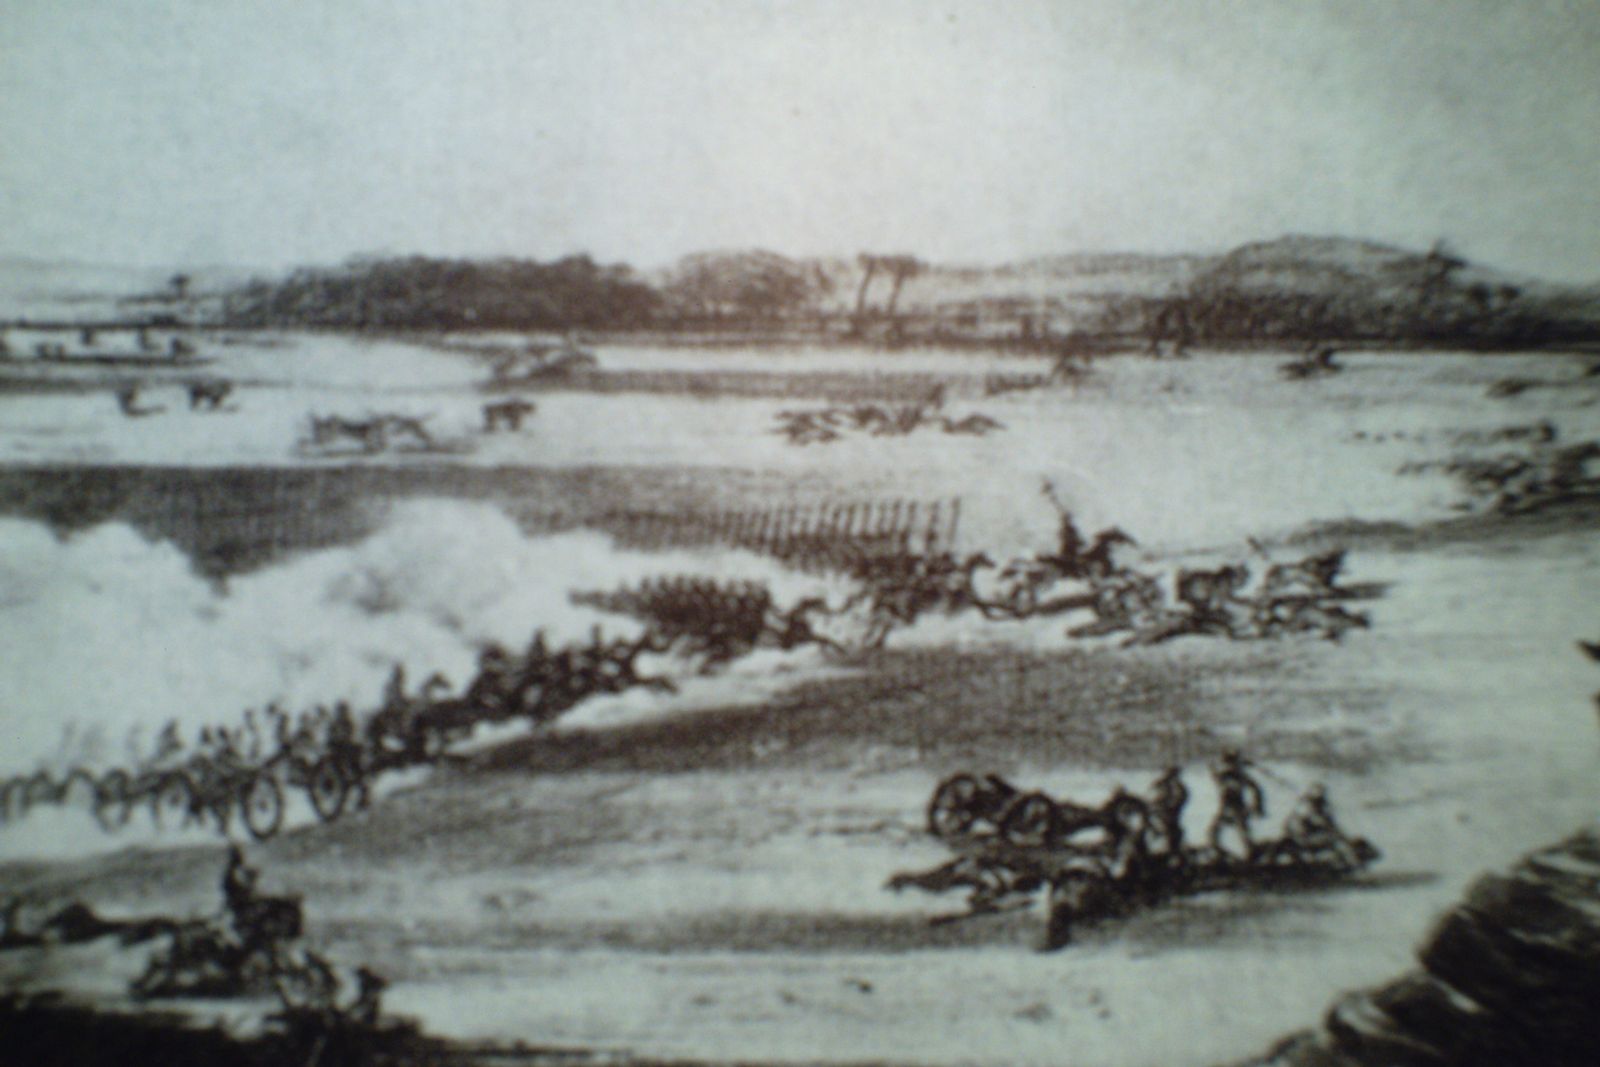 India's first war of independance 1857